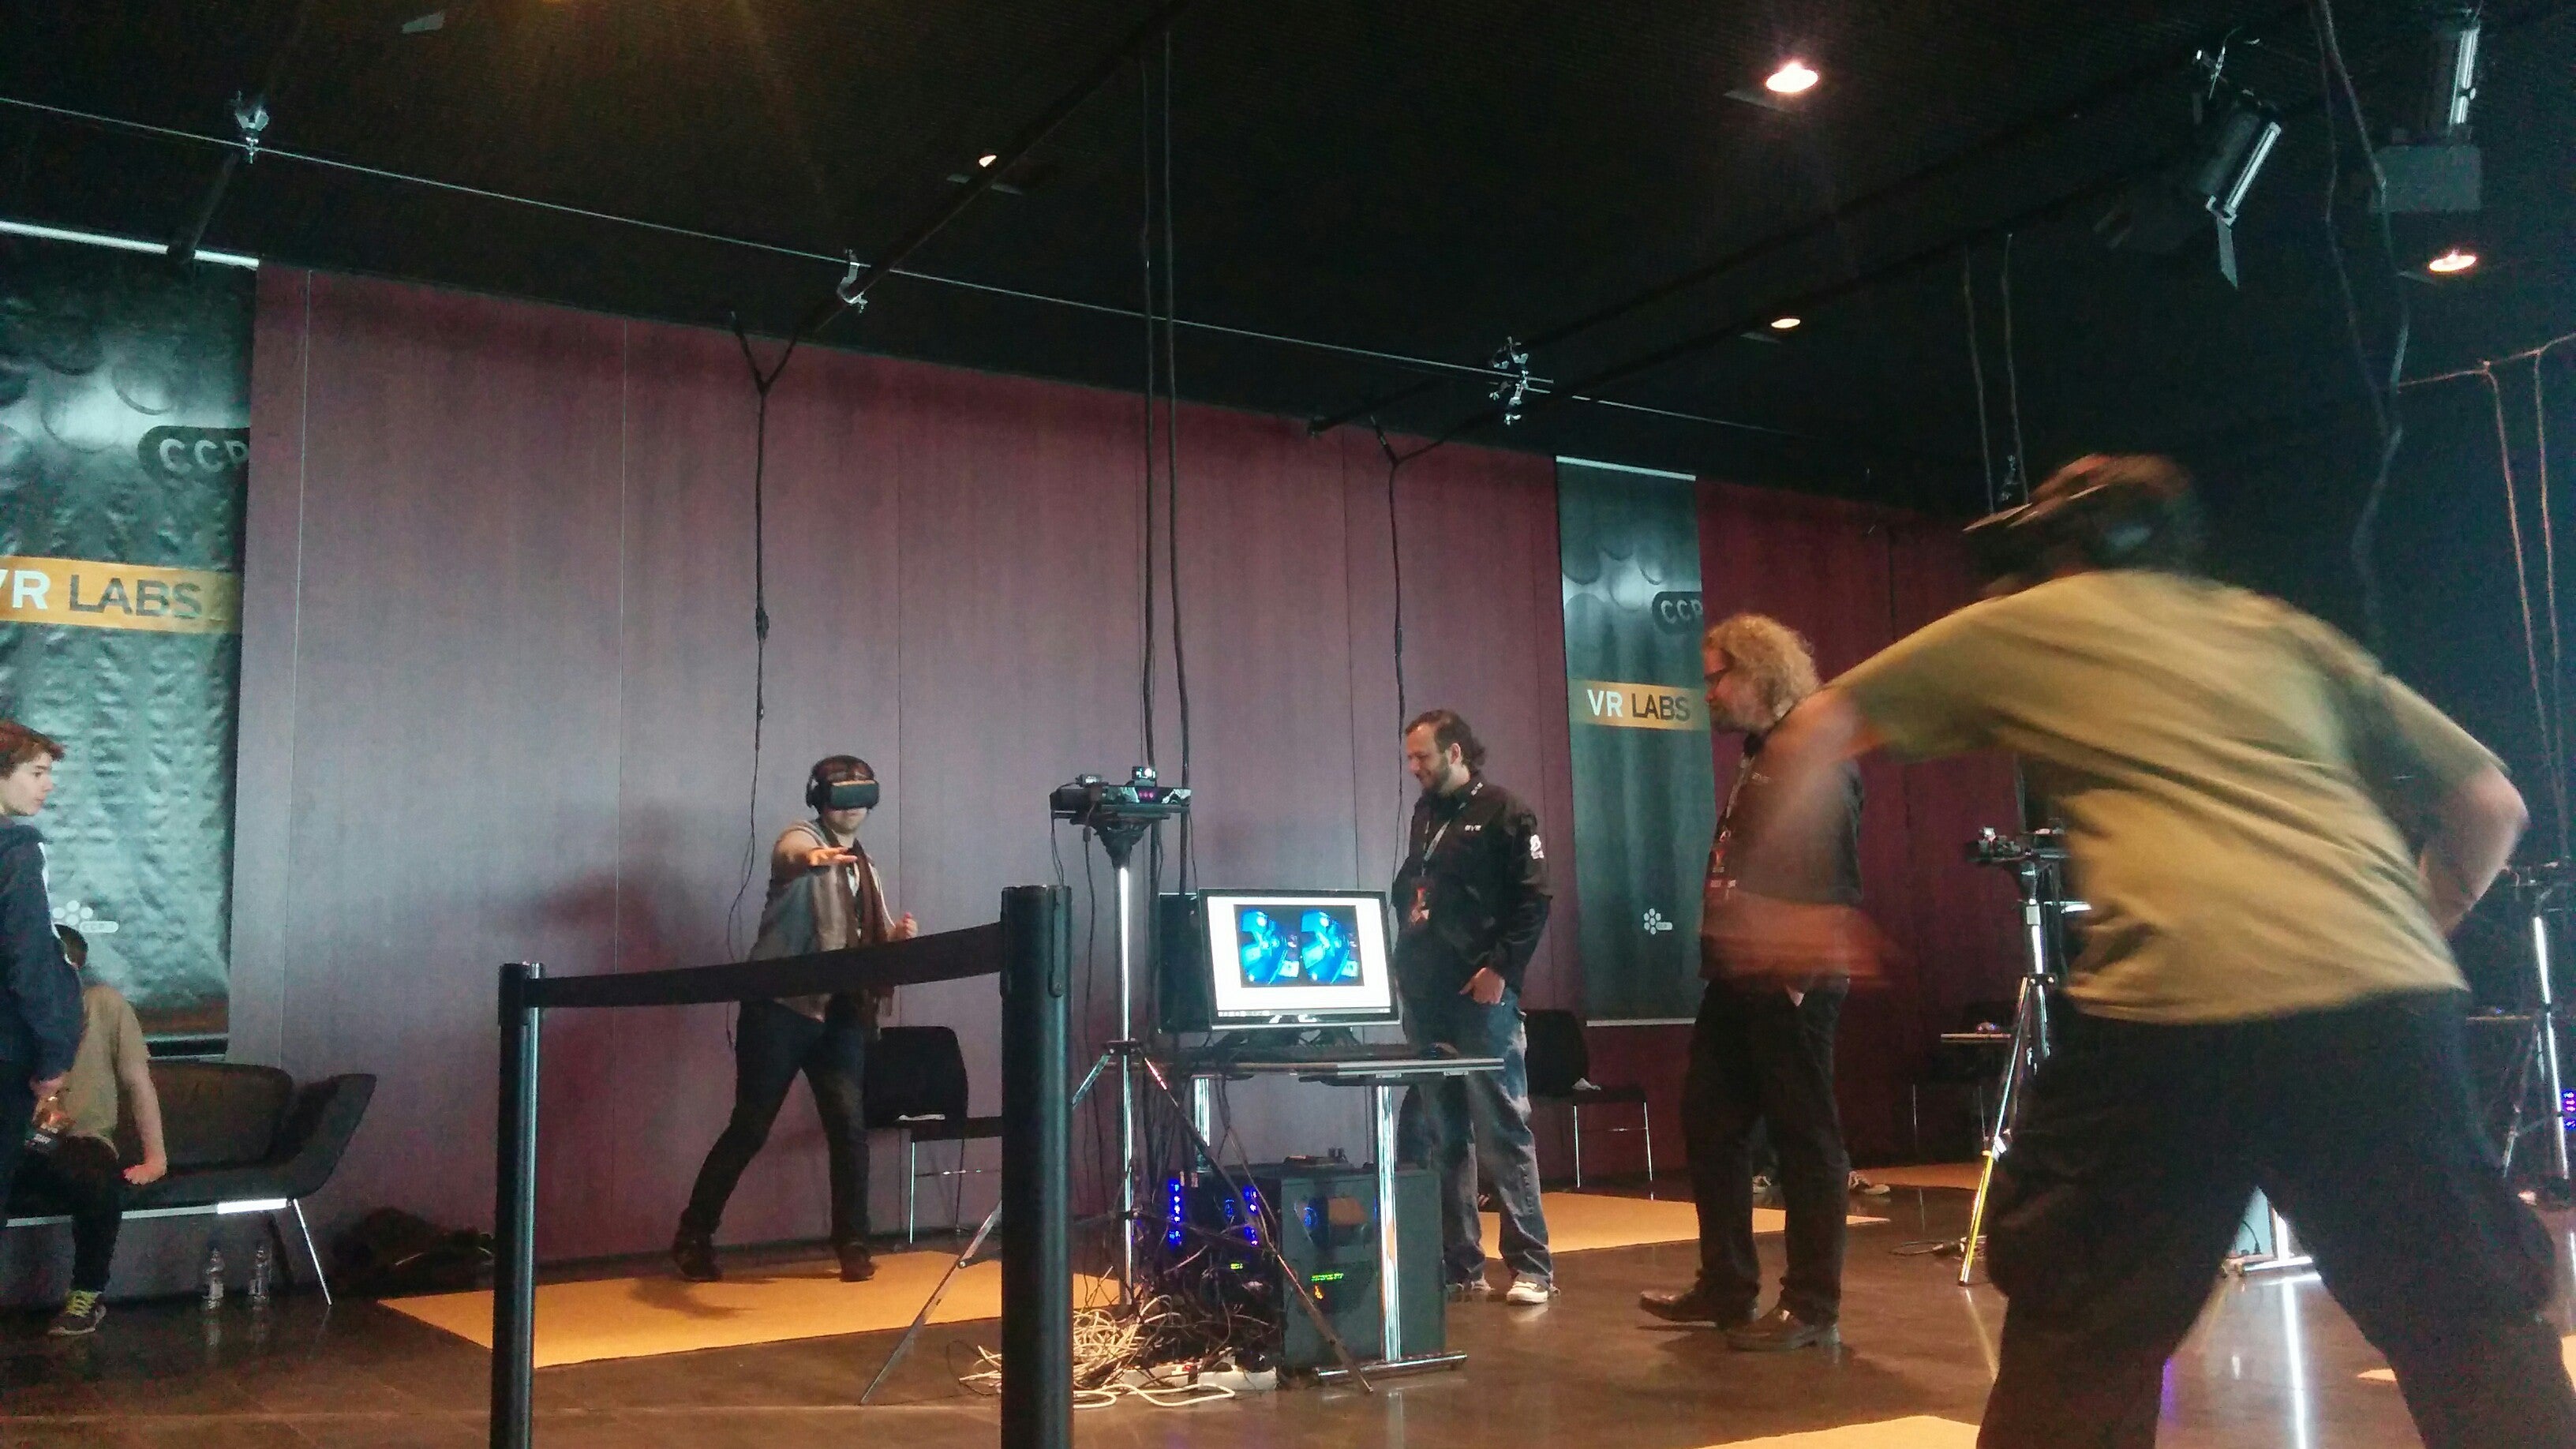 Darkroom vr. VR Lab Владивосток. VR Laboratory.